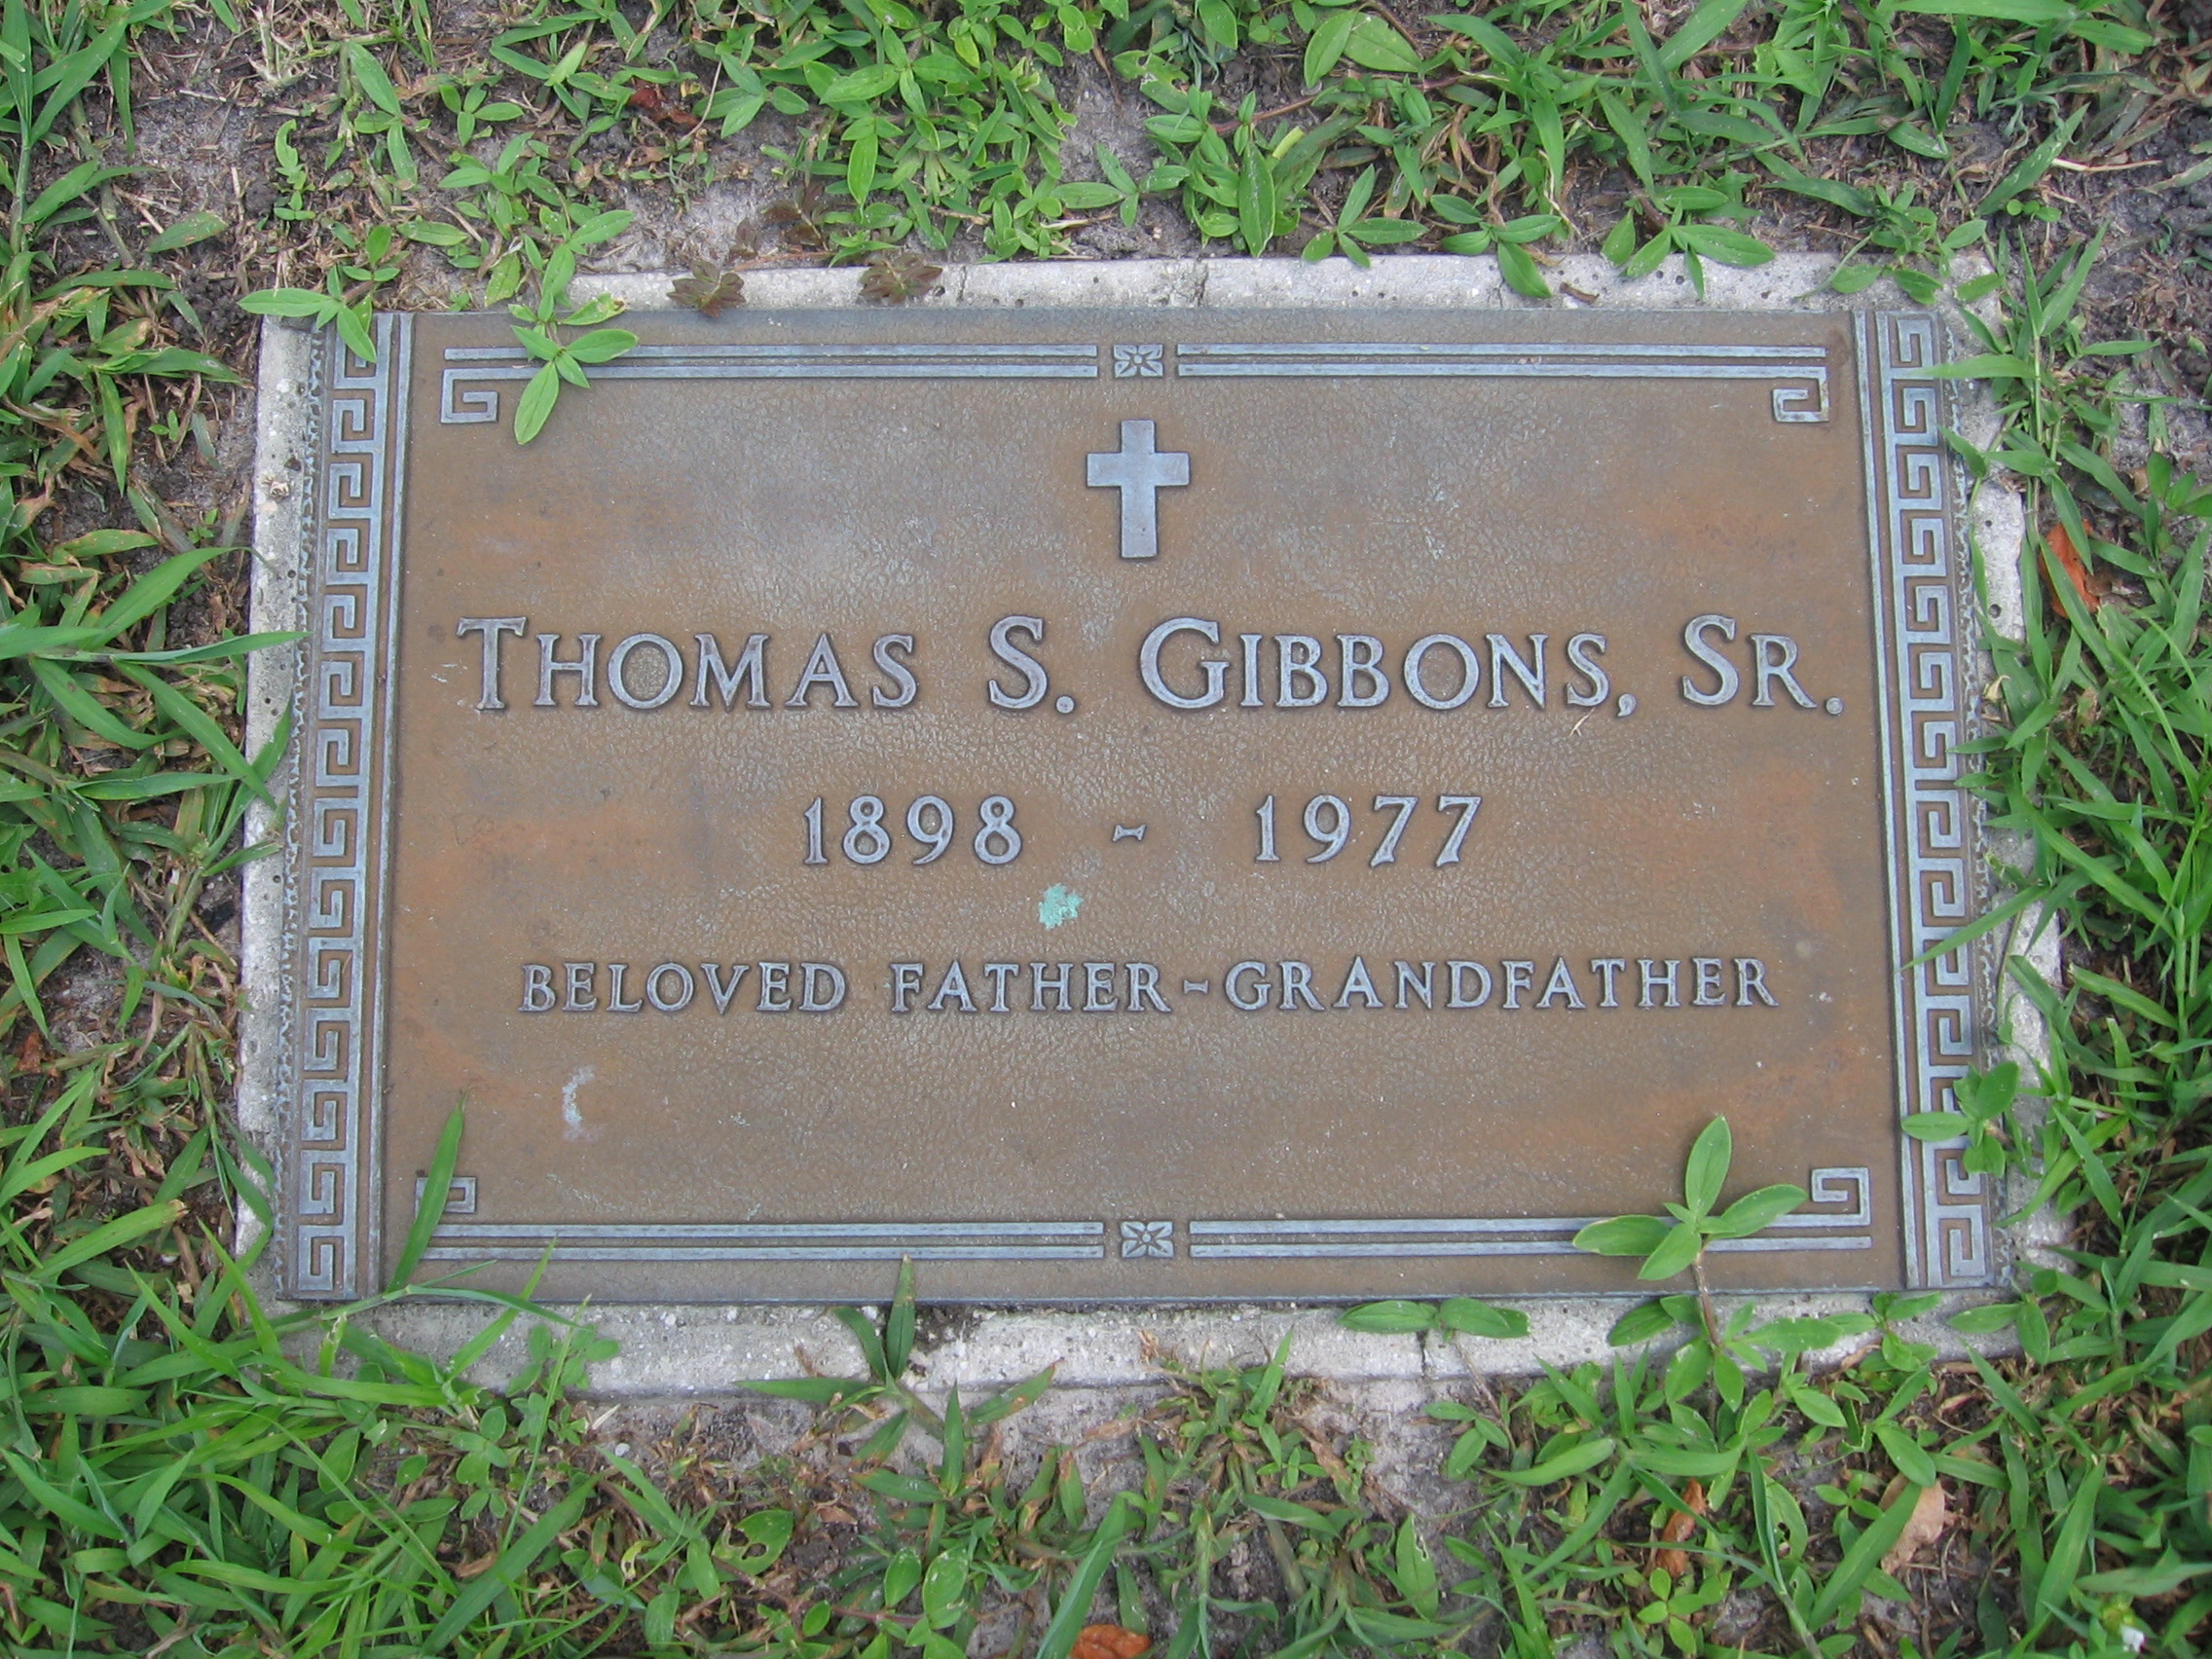 Thomas S Gibbons, Sr